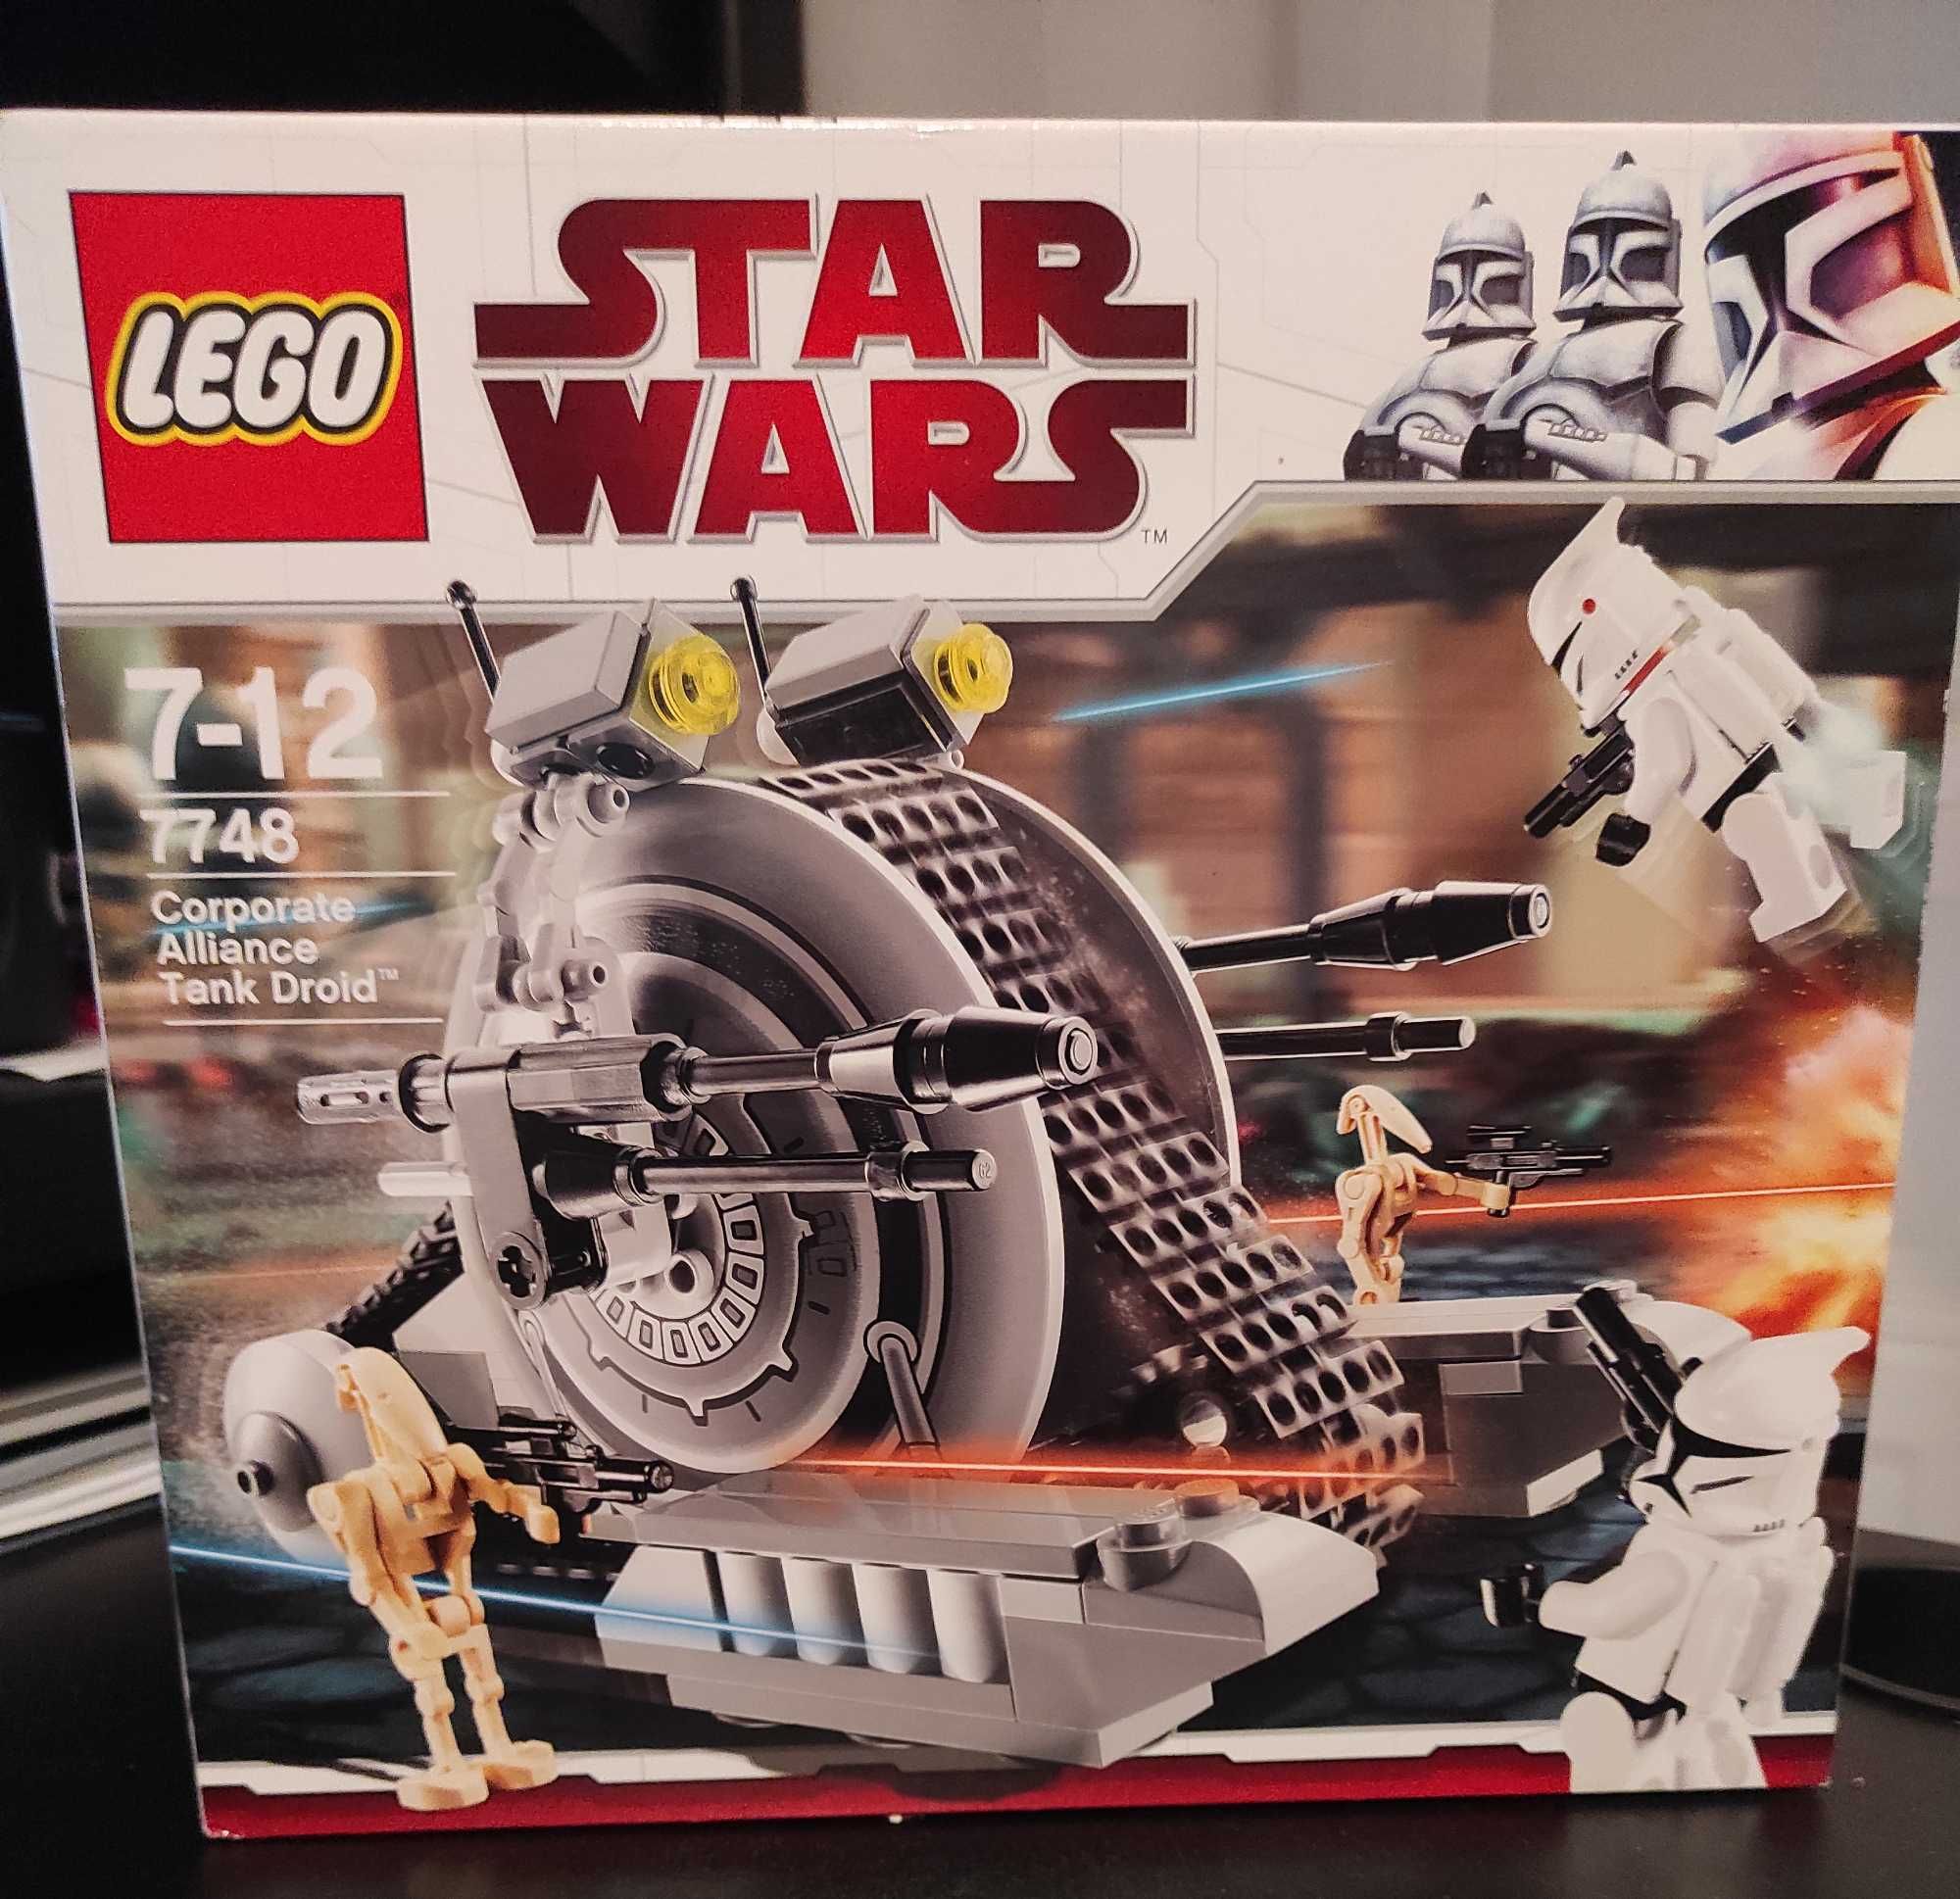 Lego Star Wars 7748 - Corporate Alliance Tank Droid -NOWY-UNIKAT